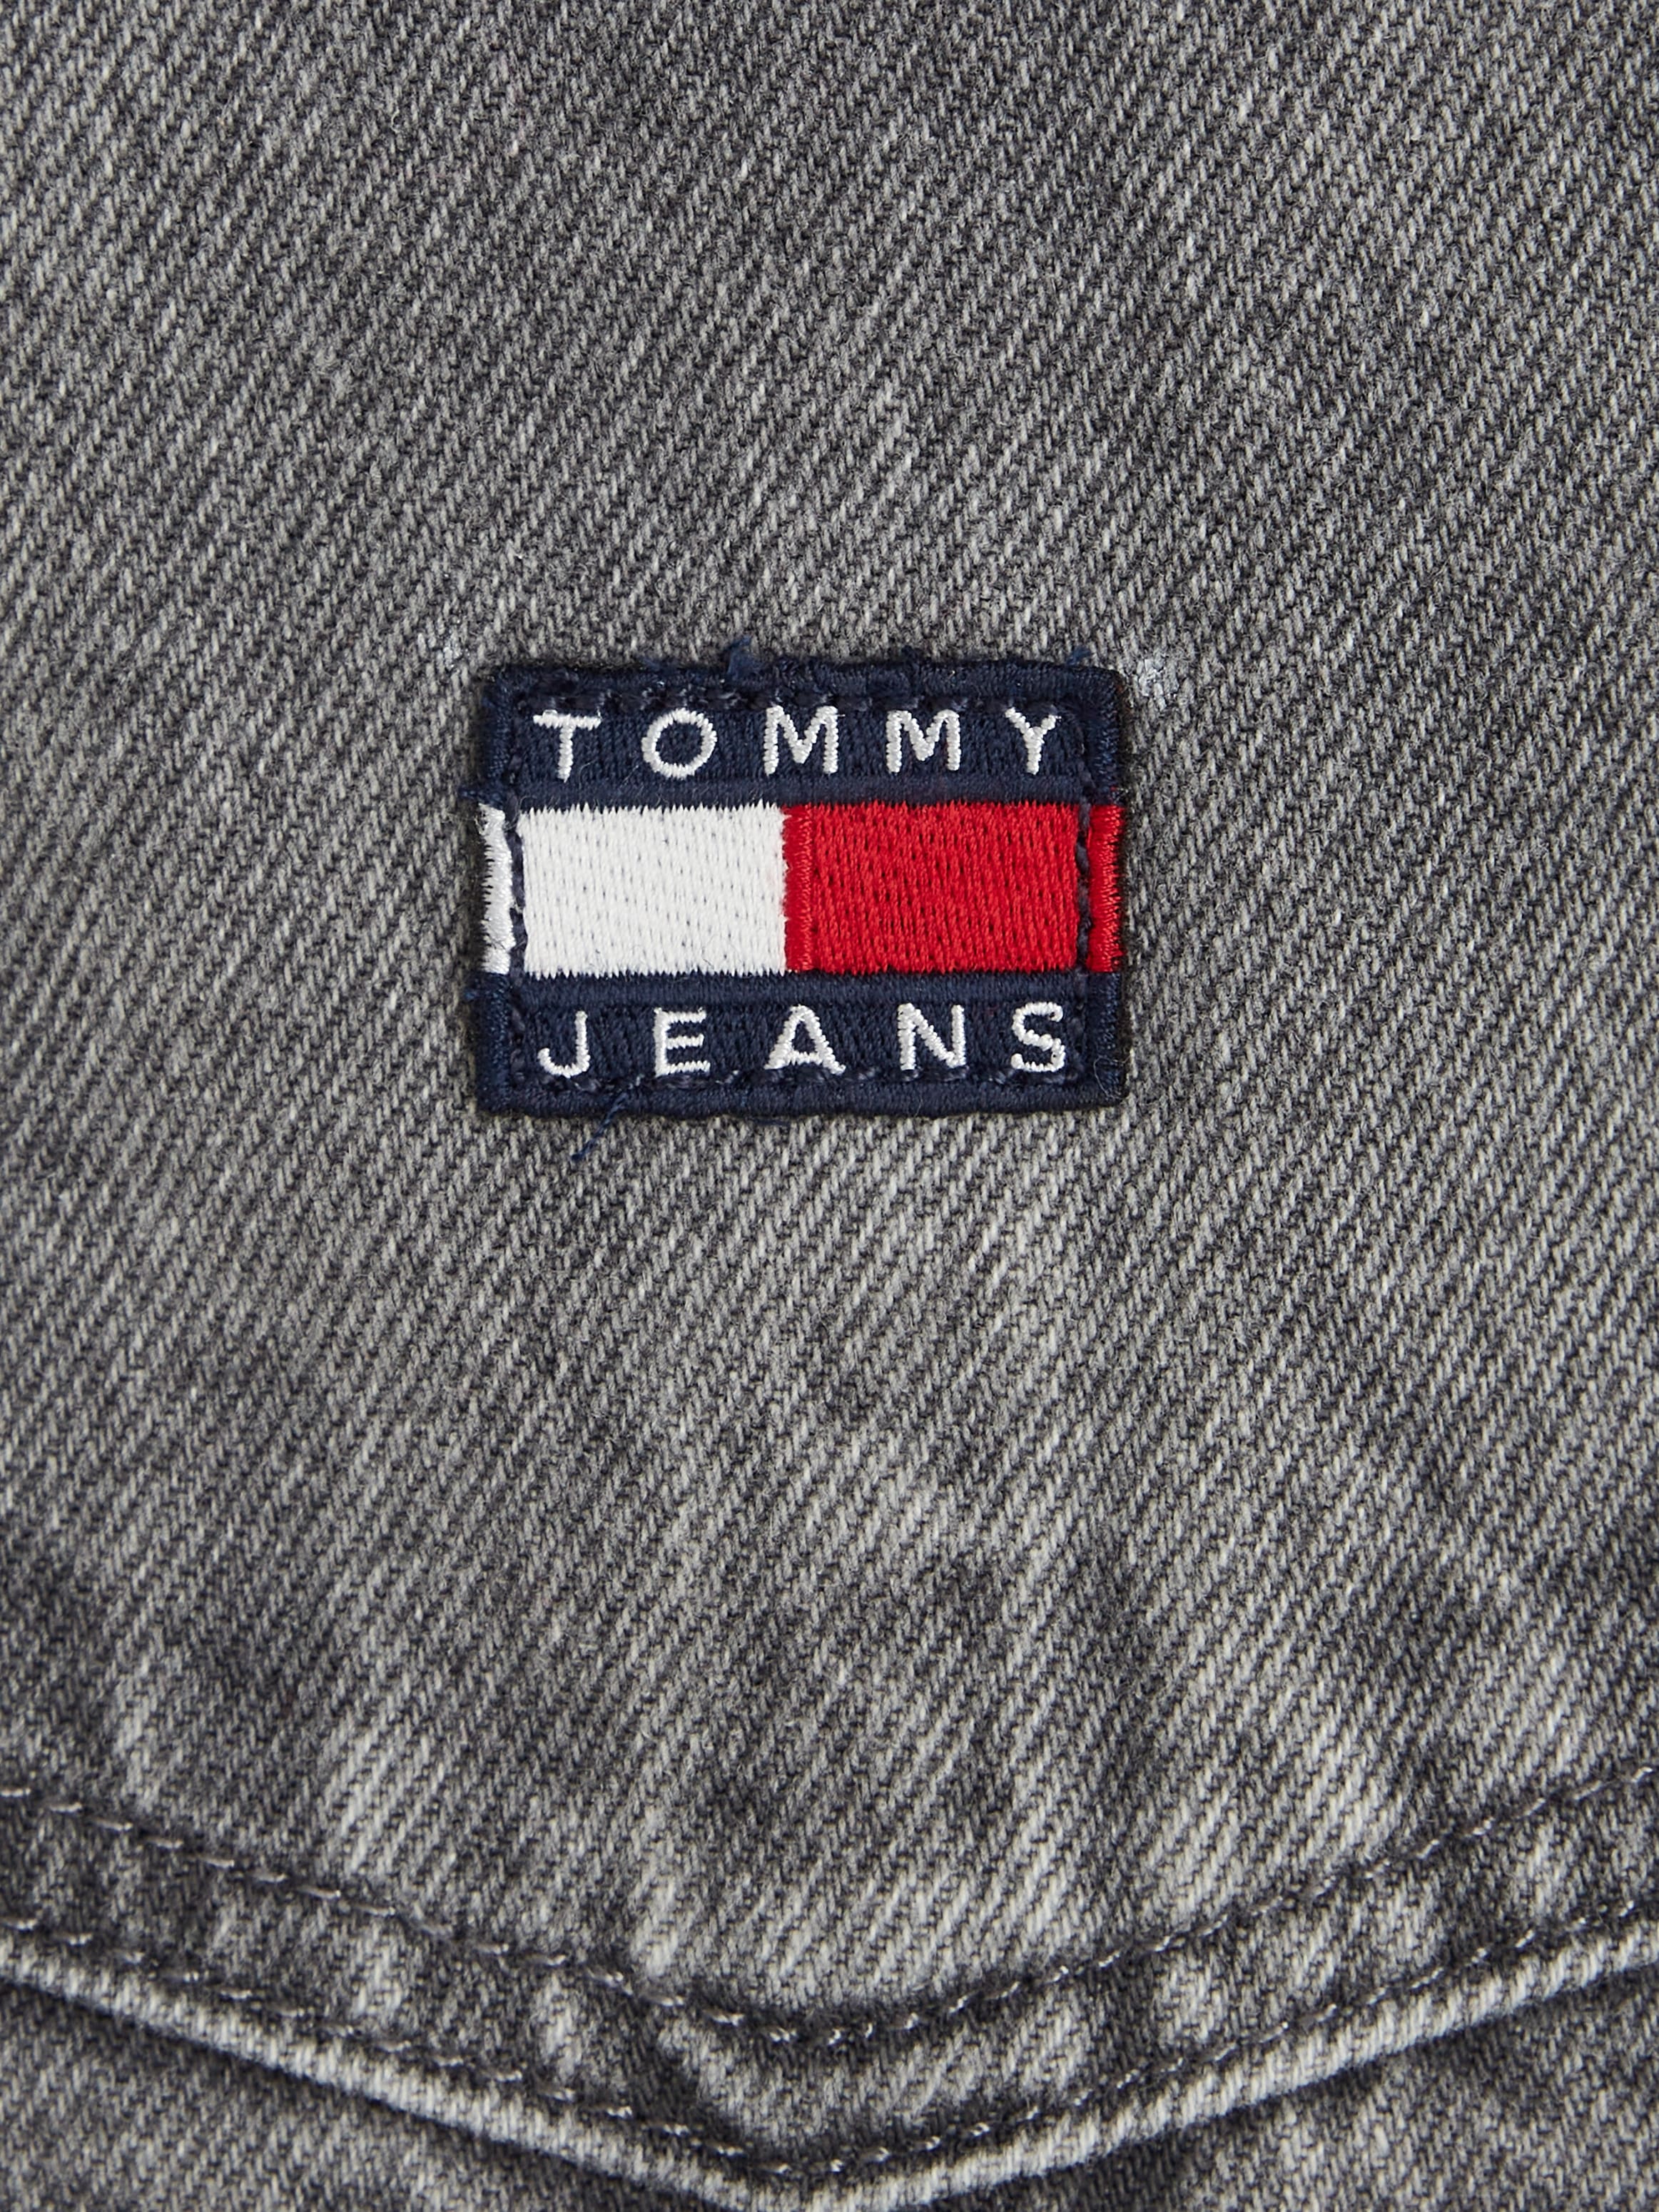 DRESS DG4072«, Tommy bei Jeanskleid Tommy Jeans »PINAFORE ♕ mit Jeans Markenlabel